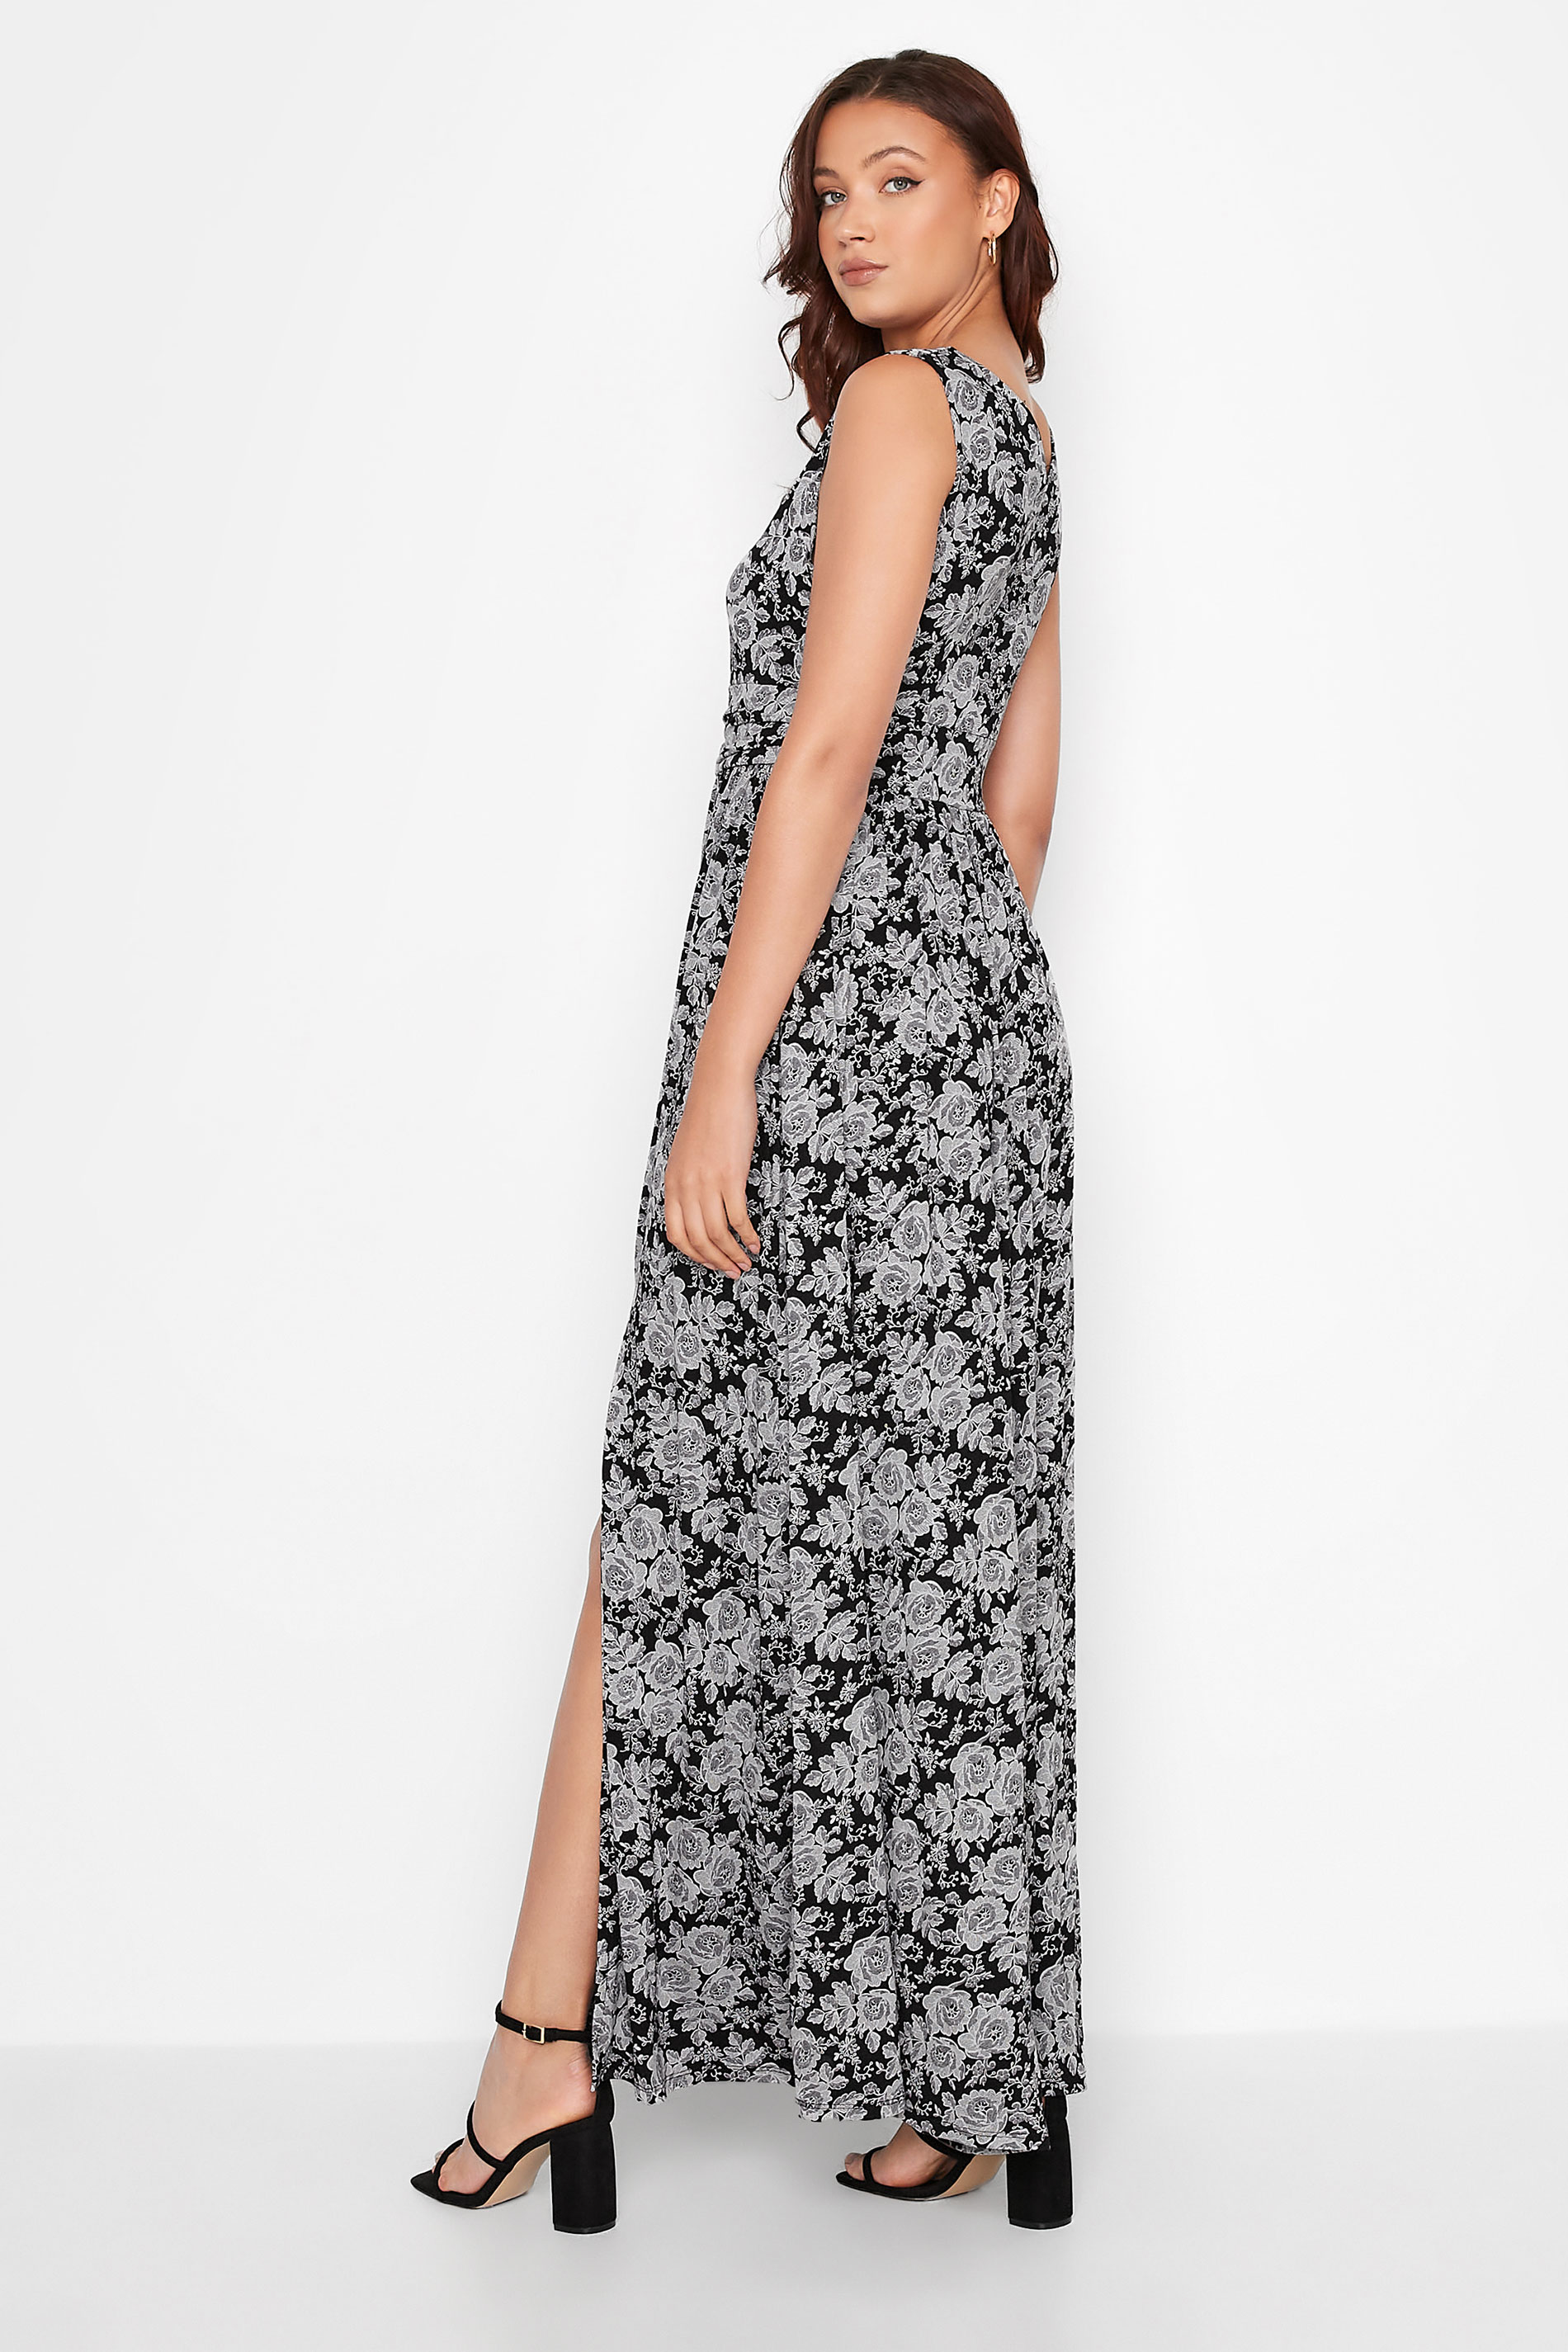 Tall Women's Black Floral Side Slit Maxi Dress | Long Tall Sally  3